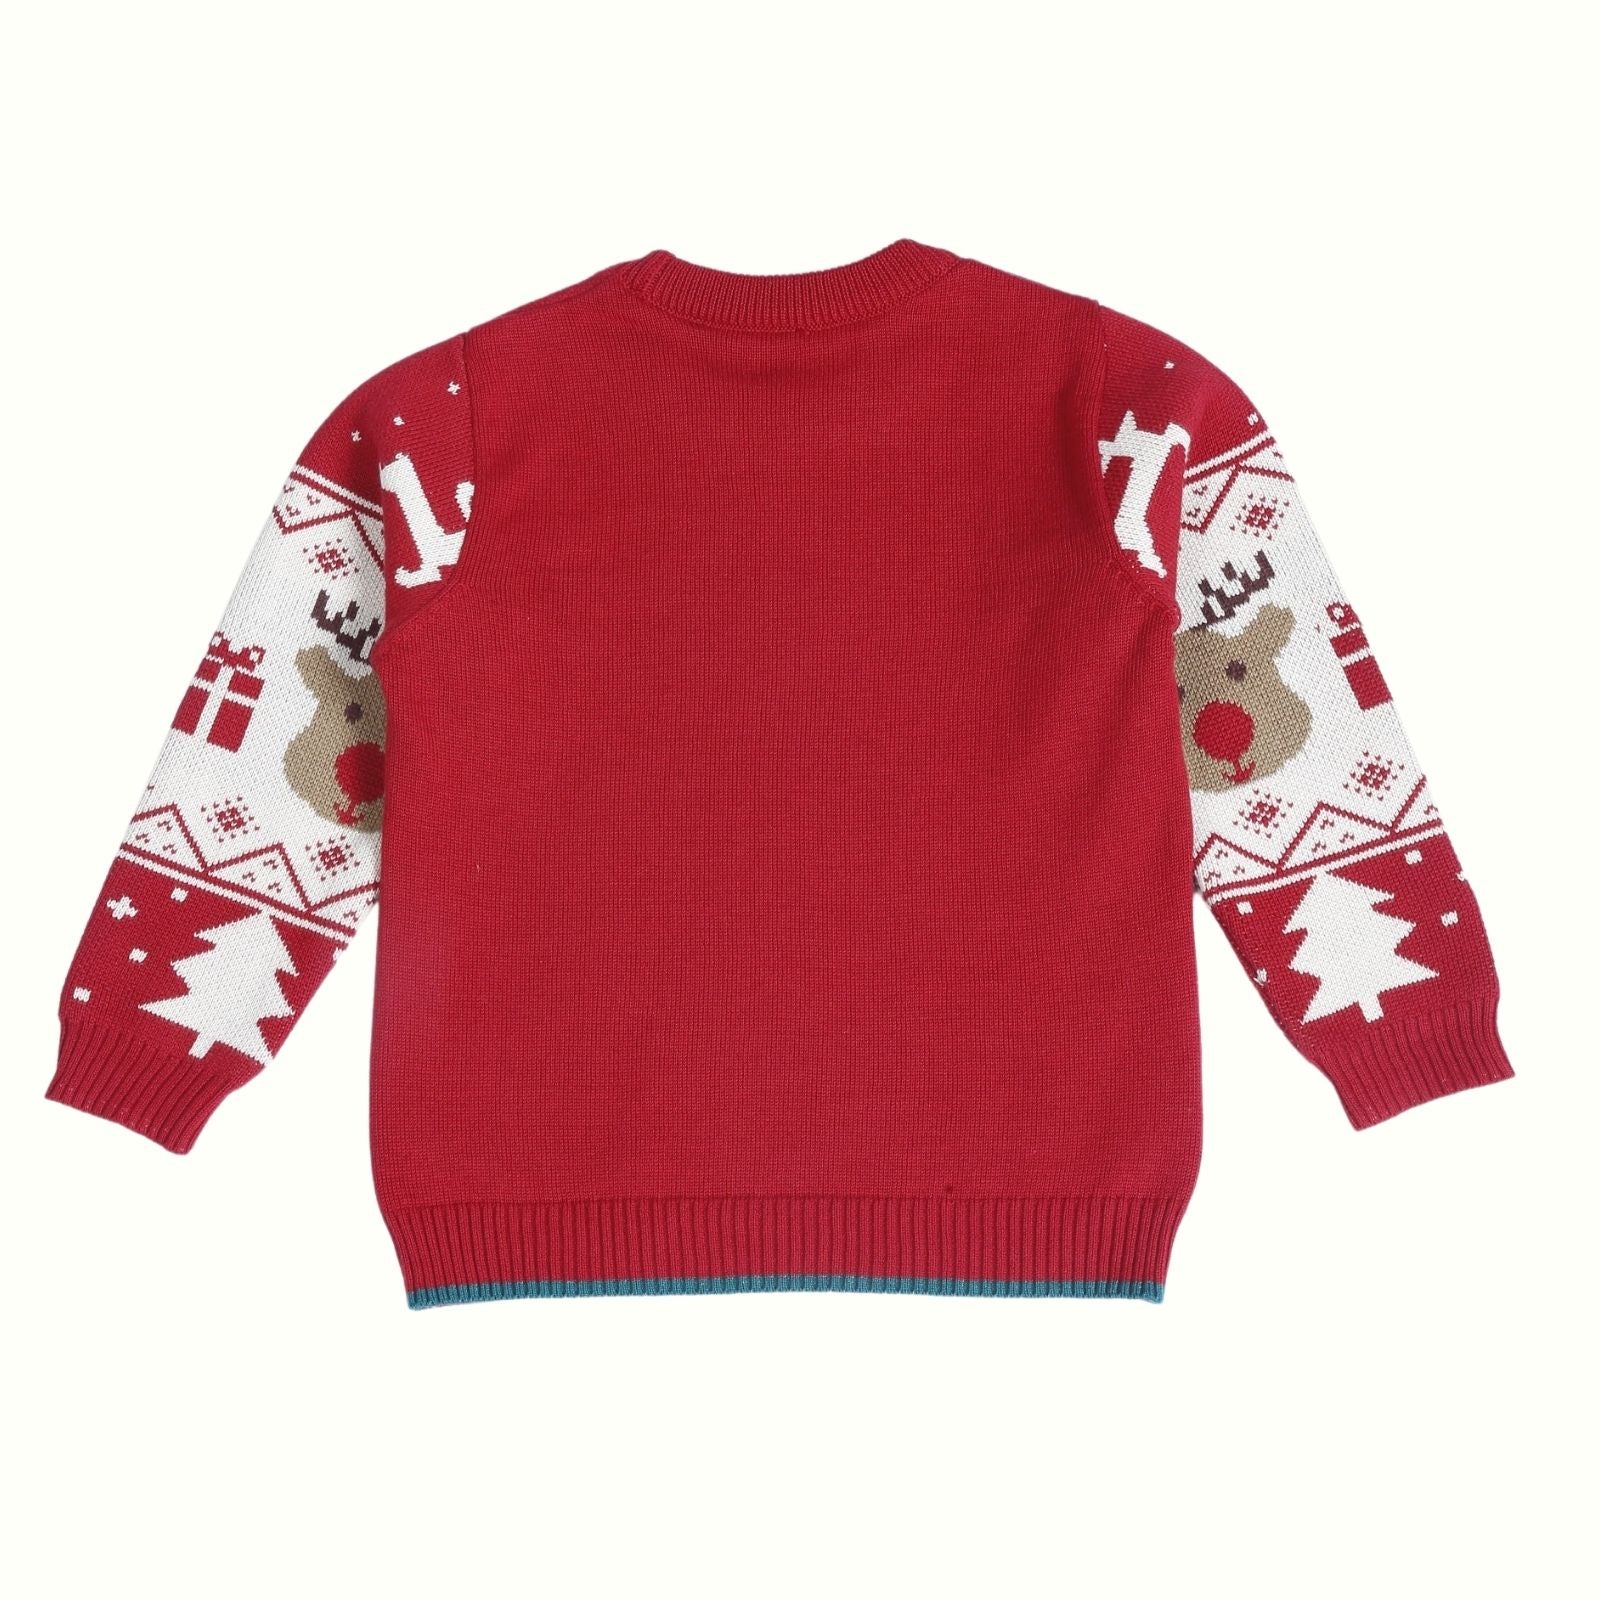 Greendeer Jaunty Reindeer, Joyful Reindeer & Hearth Warming Bear 100% Cotton Sweater Set of 3